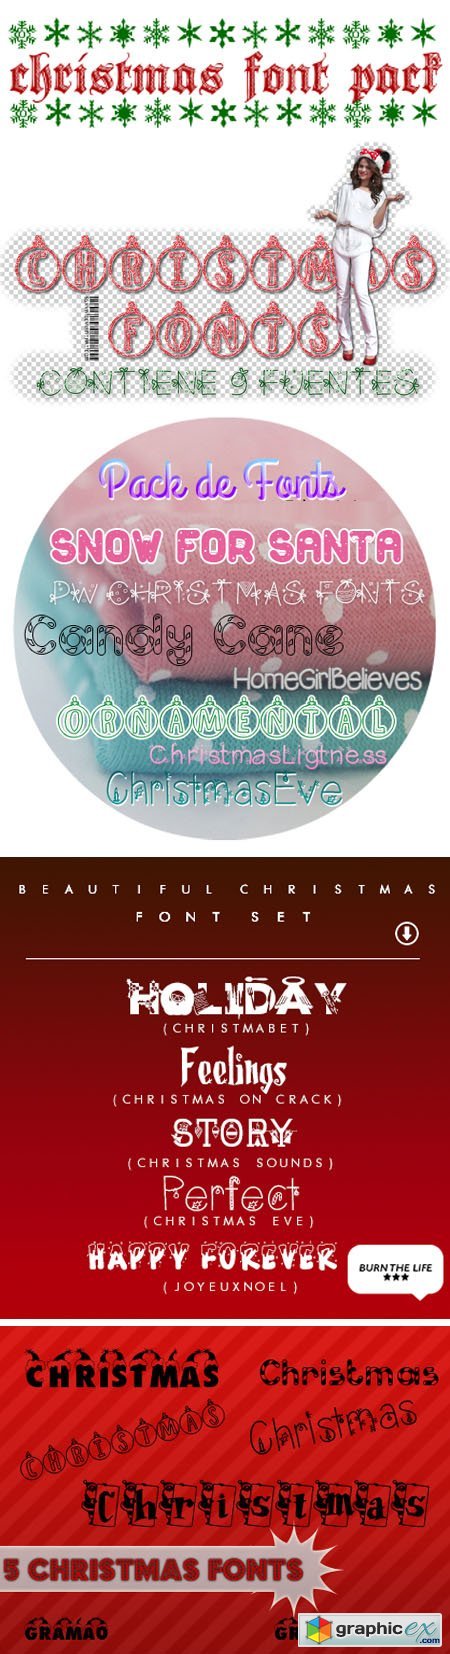 40 Beautiful Christmas Fonts